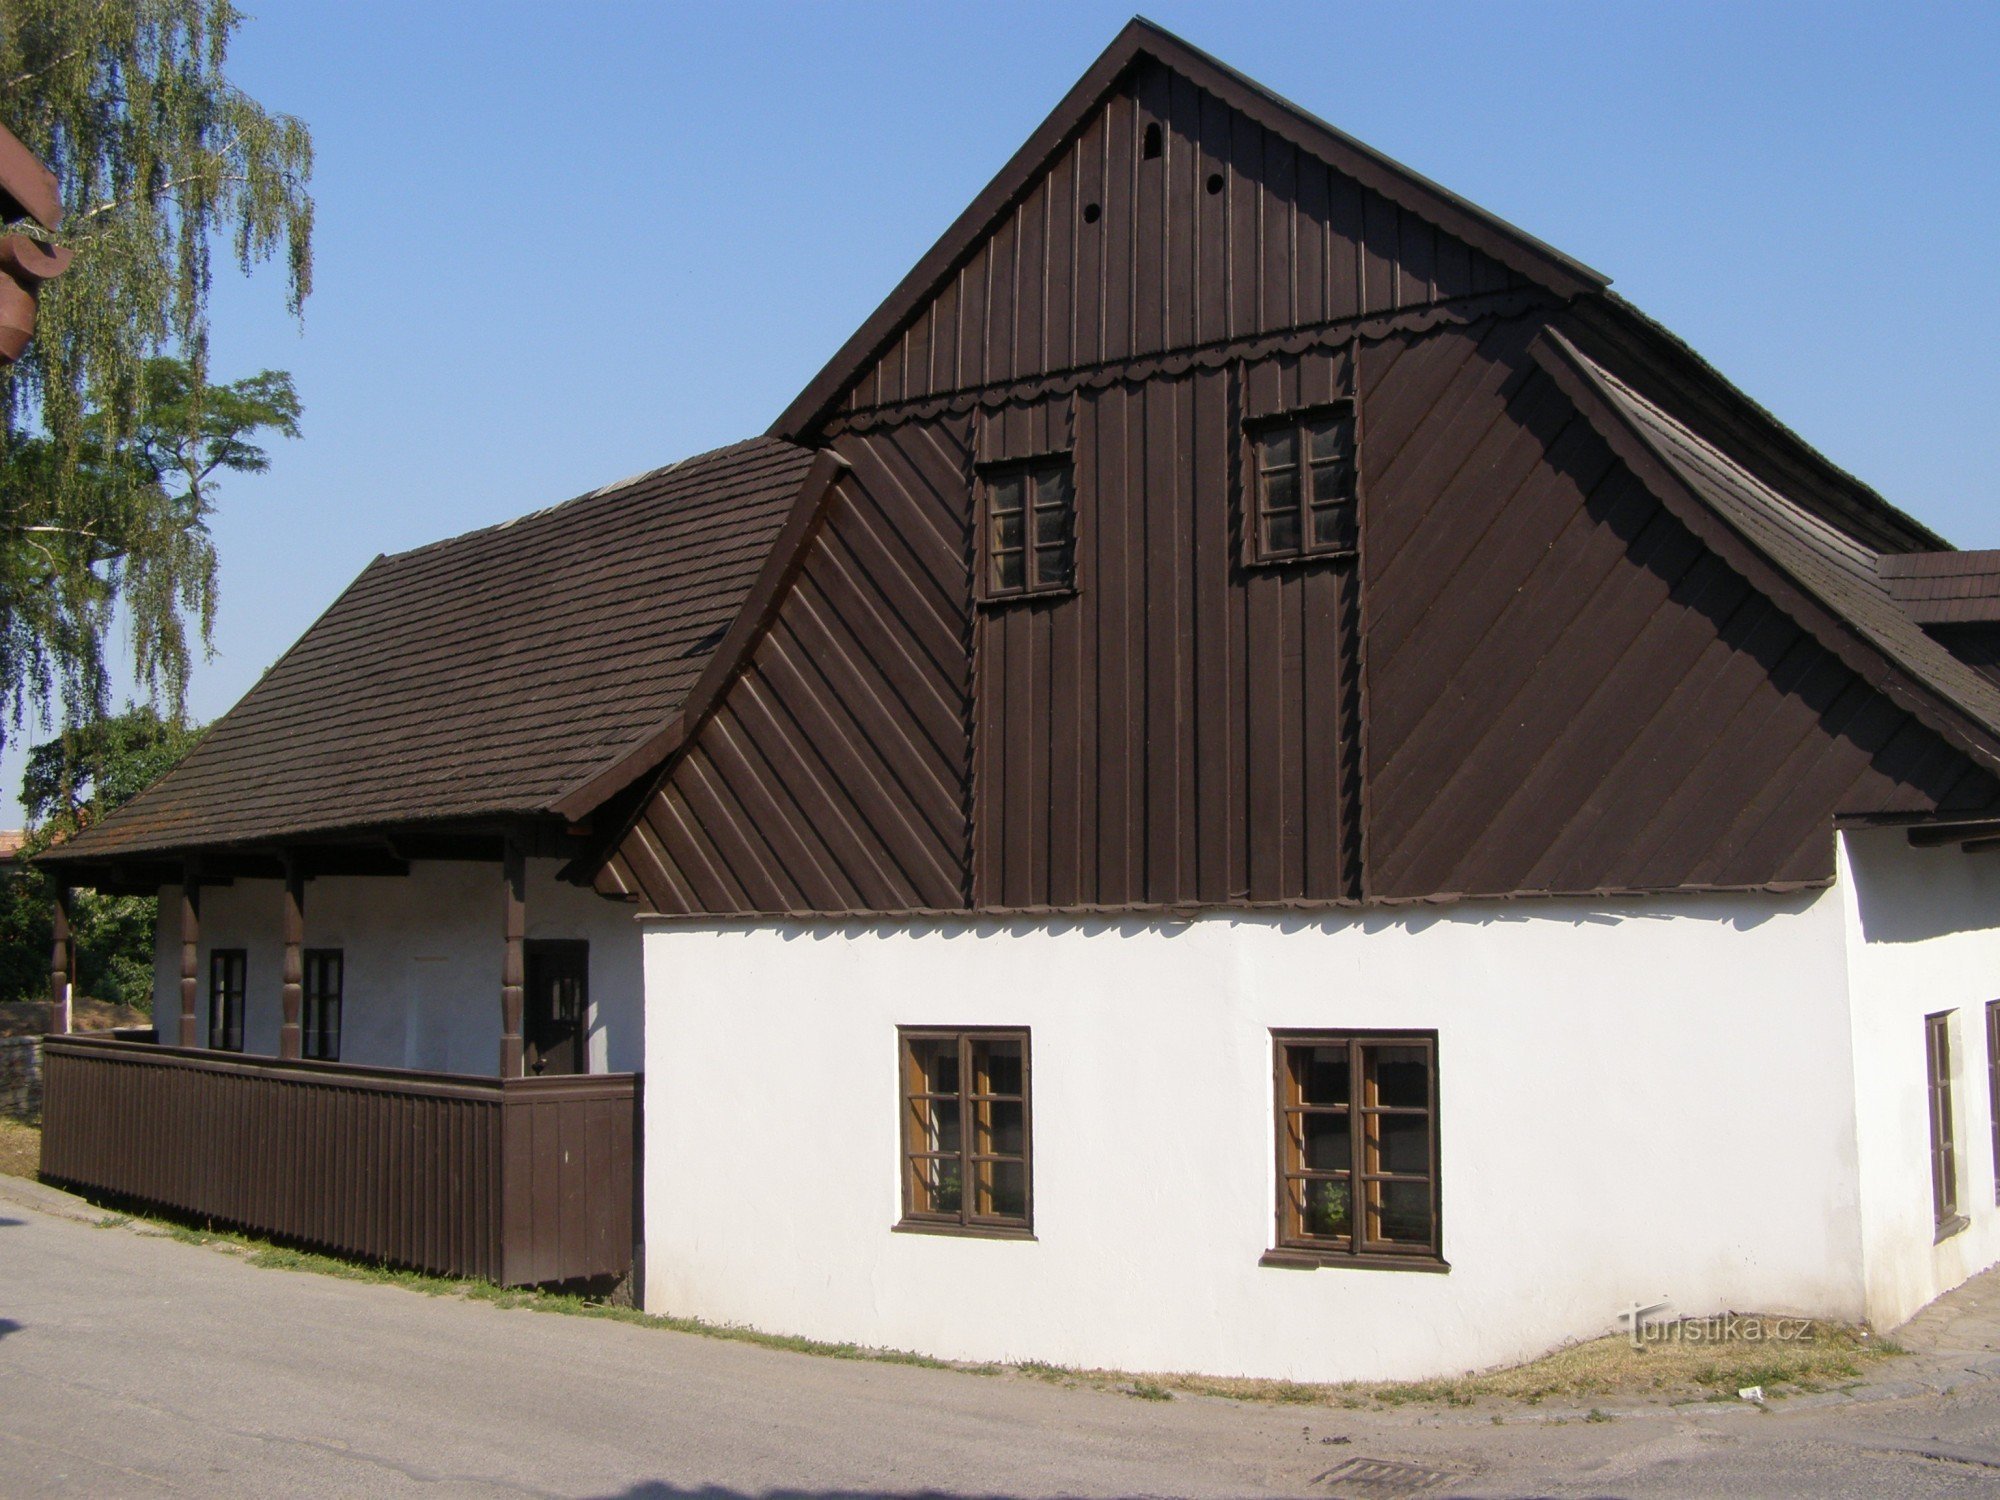 Dobruška - il luogo di nascita di FLVěk (Heka)